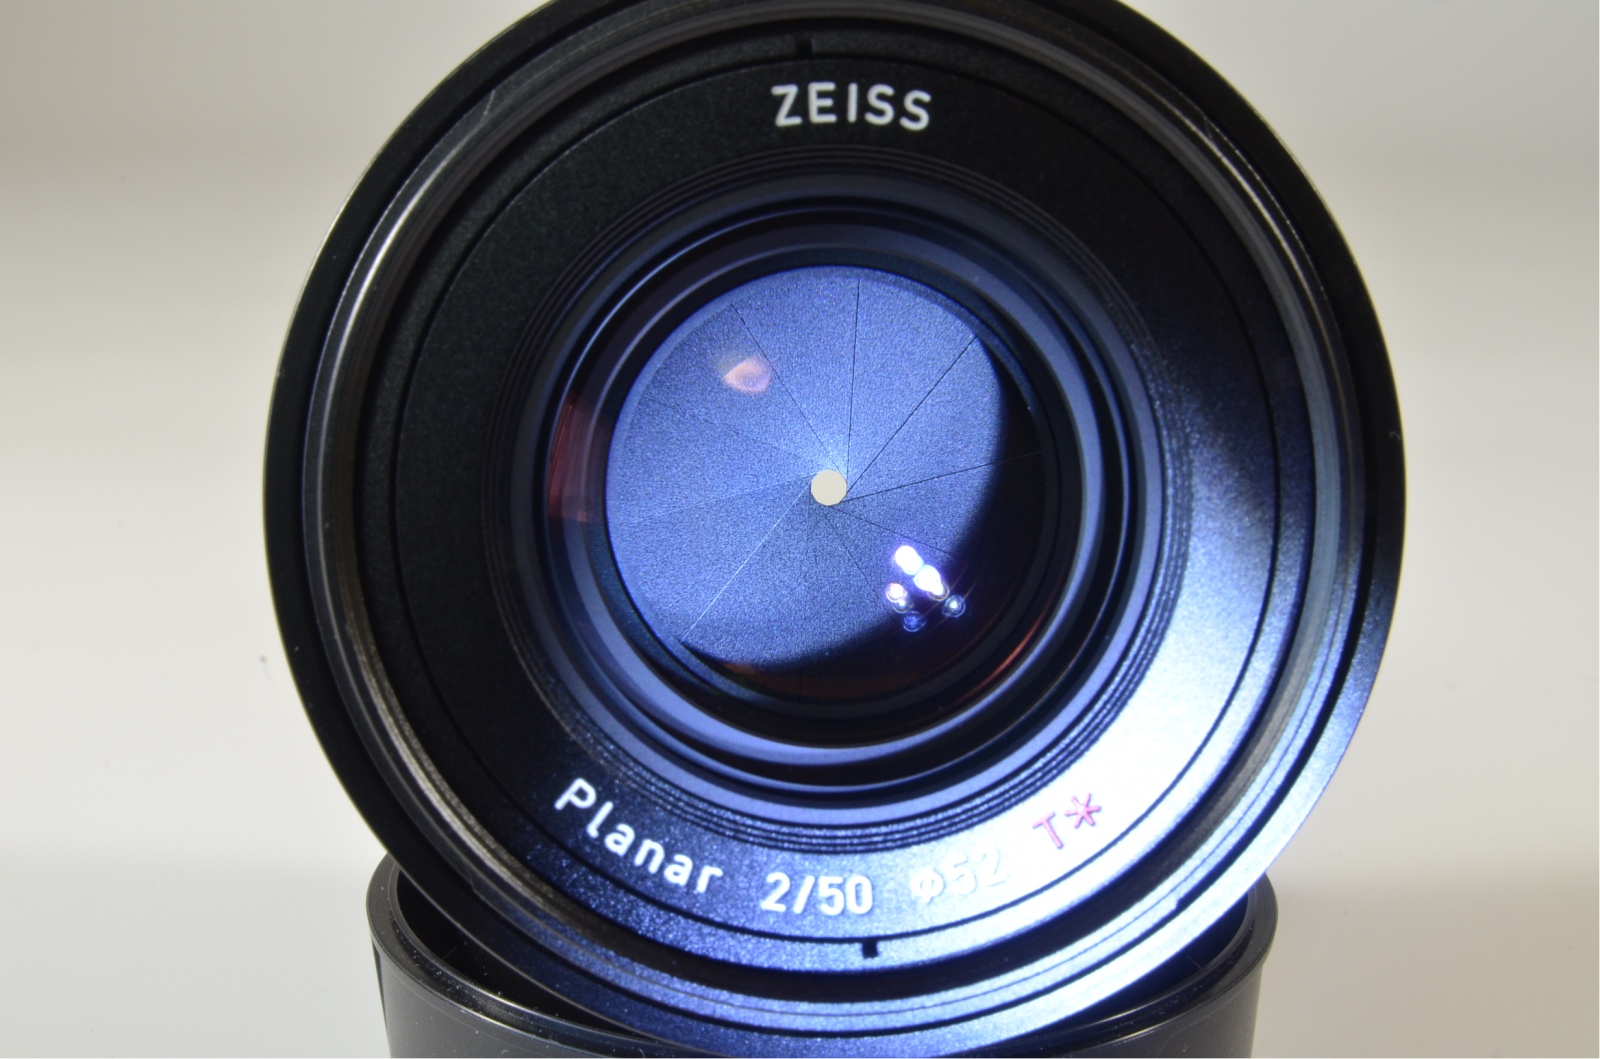 carl zeiss loxia 50mm f/2 planar t* lens sony e mount